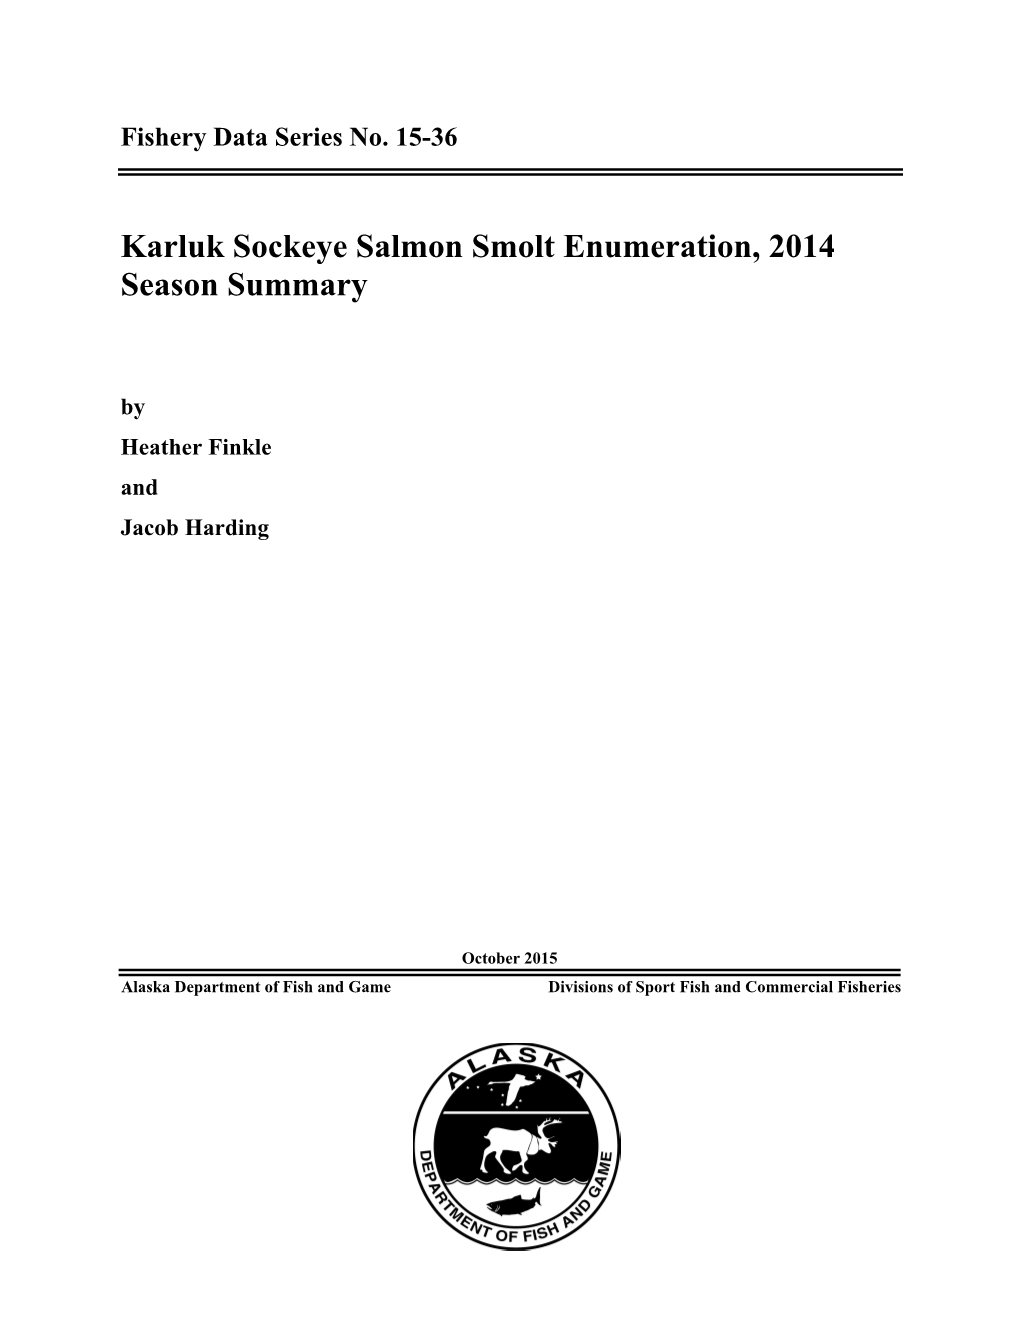 Karluk Sockeye Salmon Smolt Enumeration, 2014 Season Summary. Alaska Department of Fish and Game, Fishery Data Series No